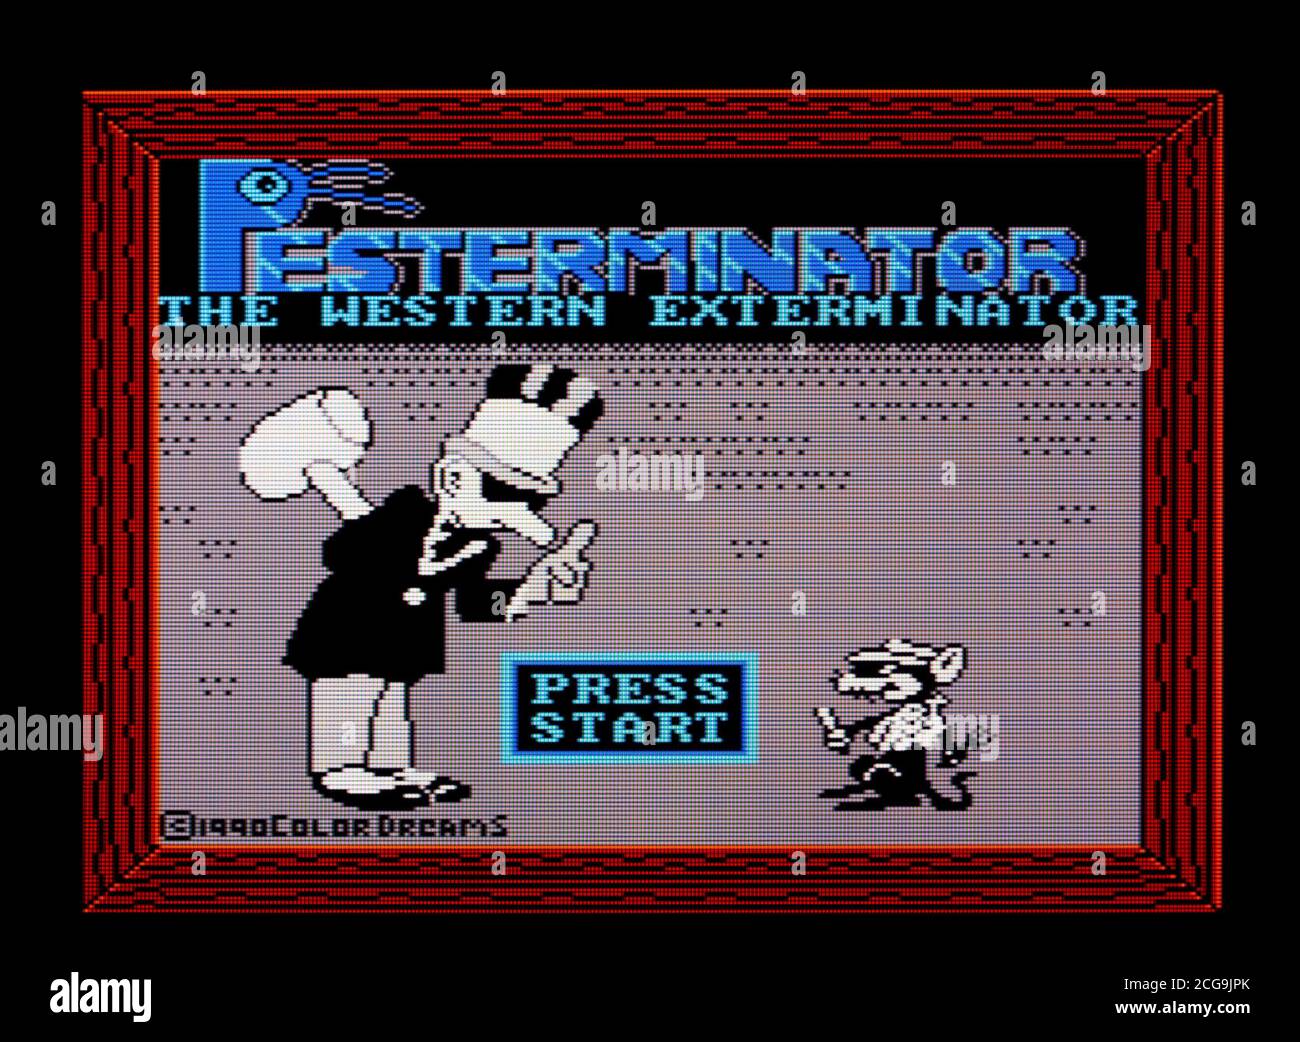 Pesterminator - Nintendo Entertainment System - NES Videogame - Editorial use only Stock Photo